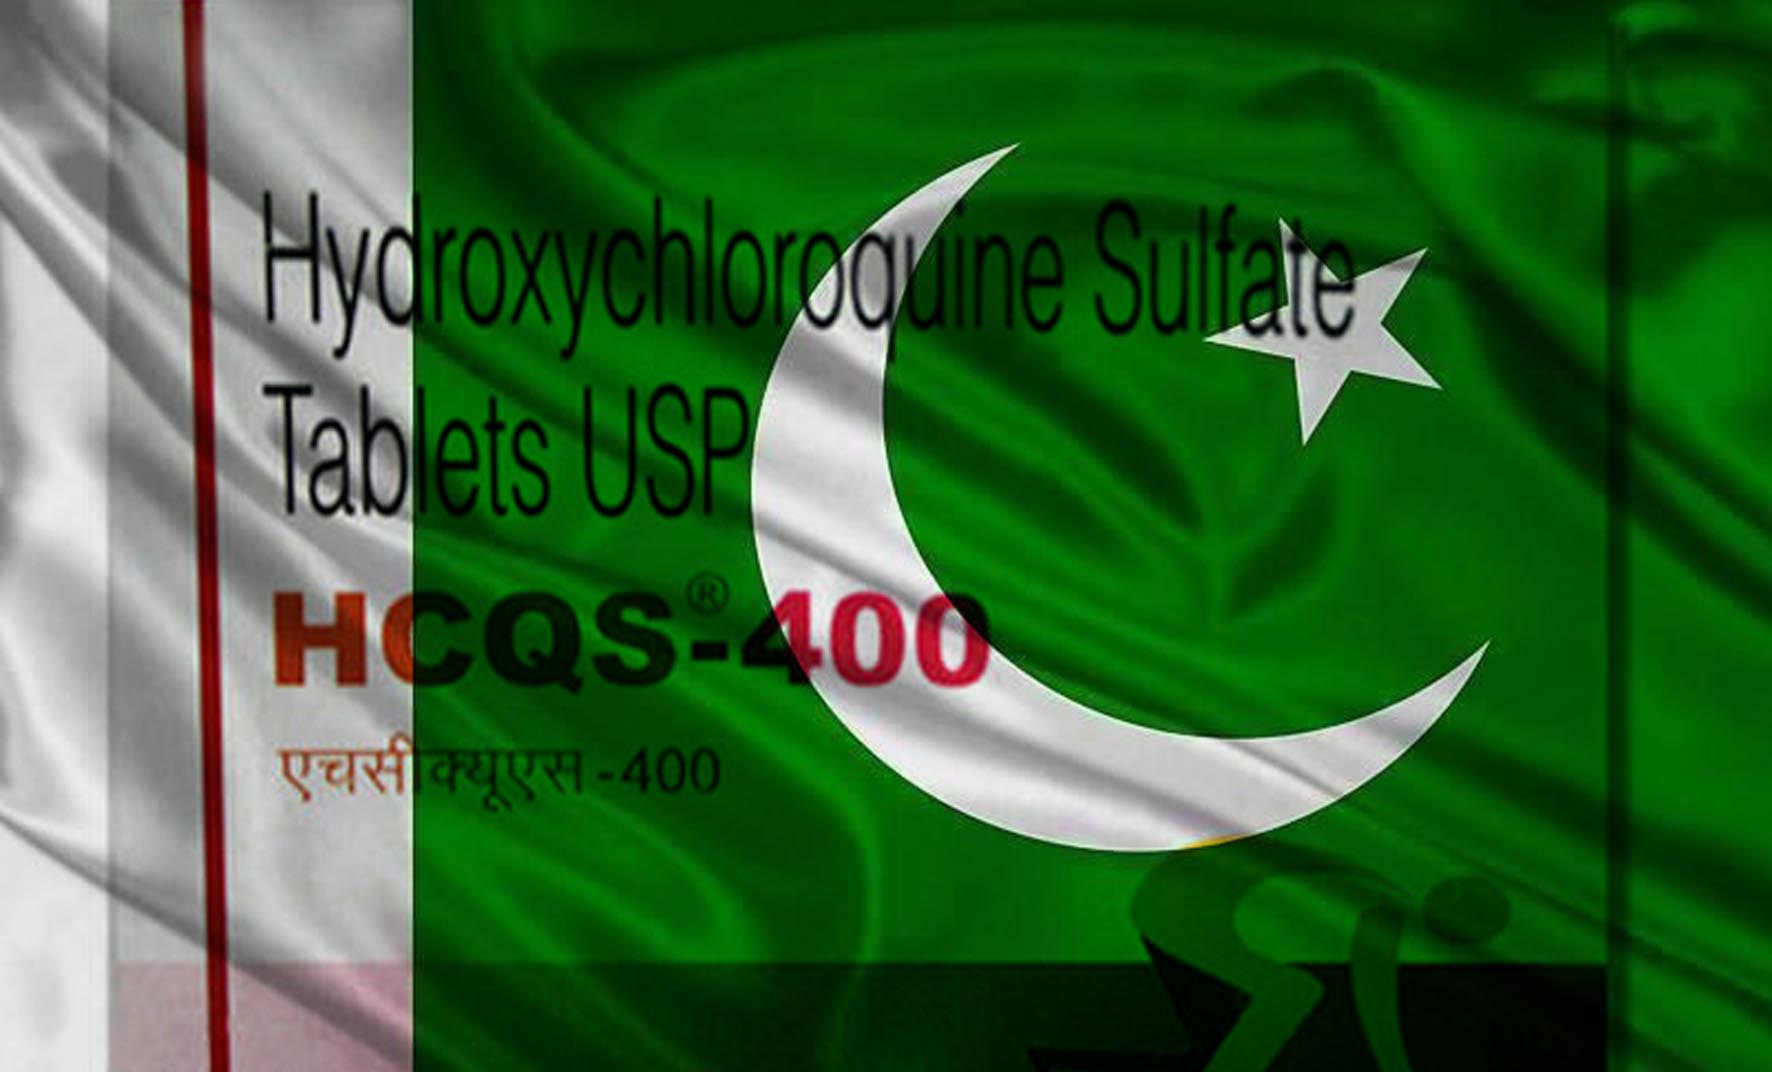 Pakistan seeks Hydroxychloroquine from India